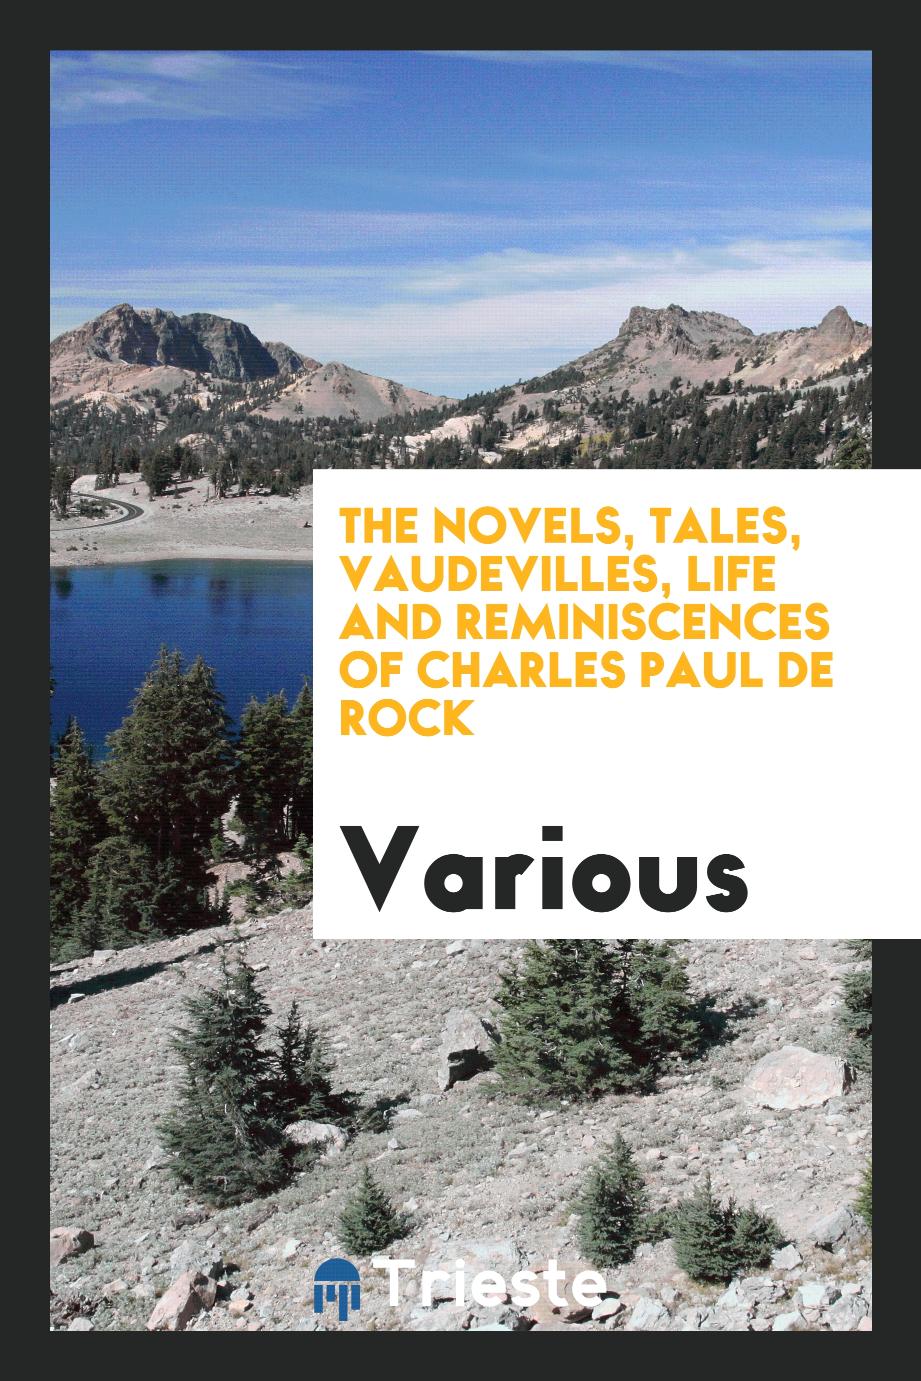 The Novels, Tales, Vaudevilles, Life and Reminiscences of Charles Paul de Rock